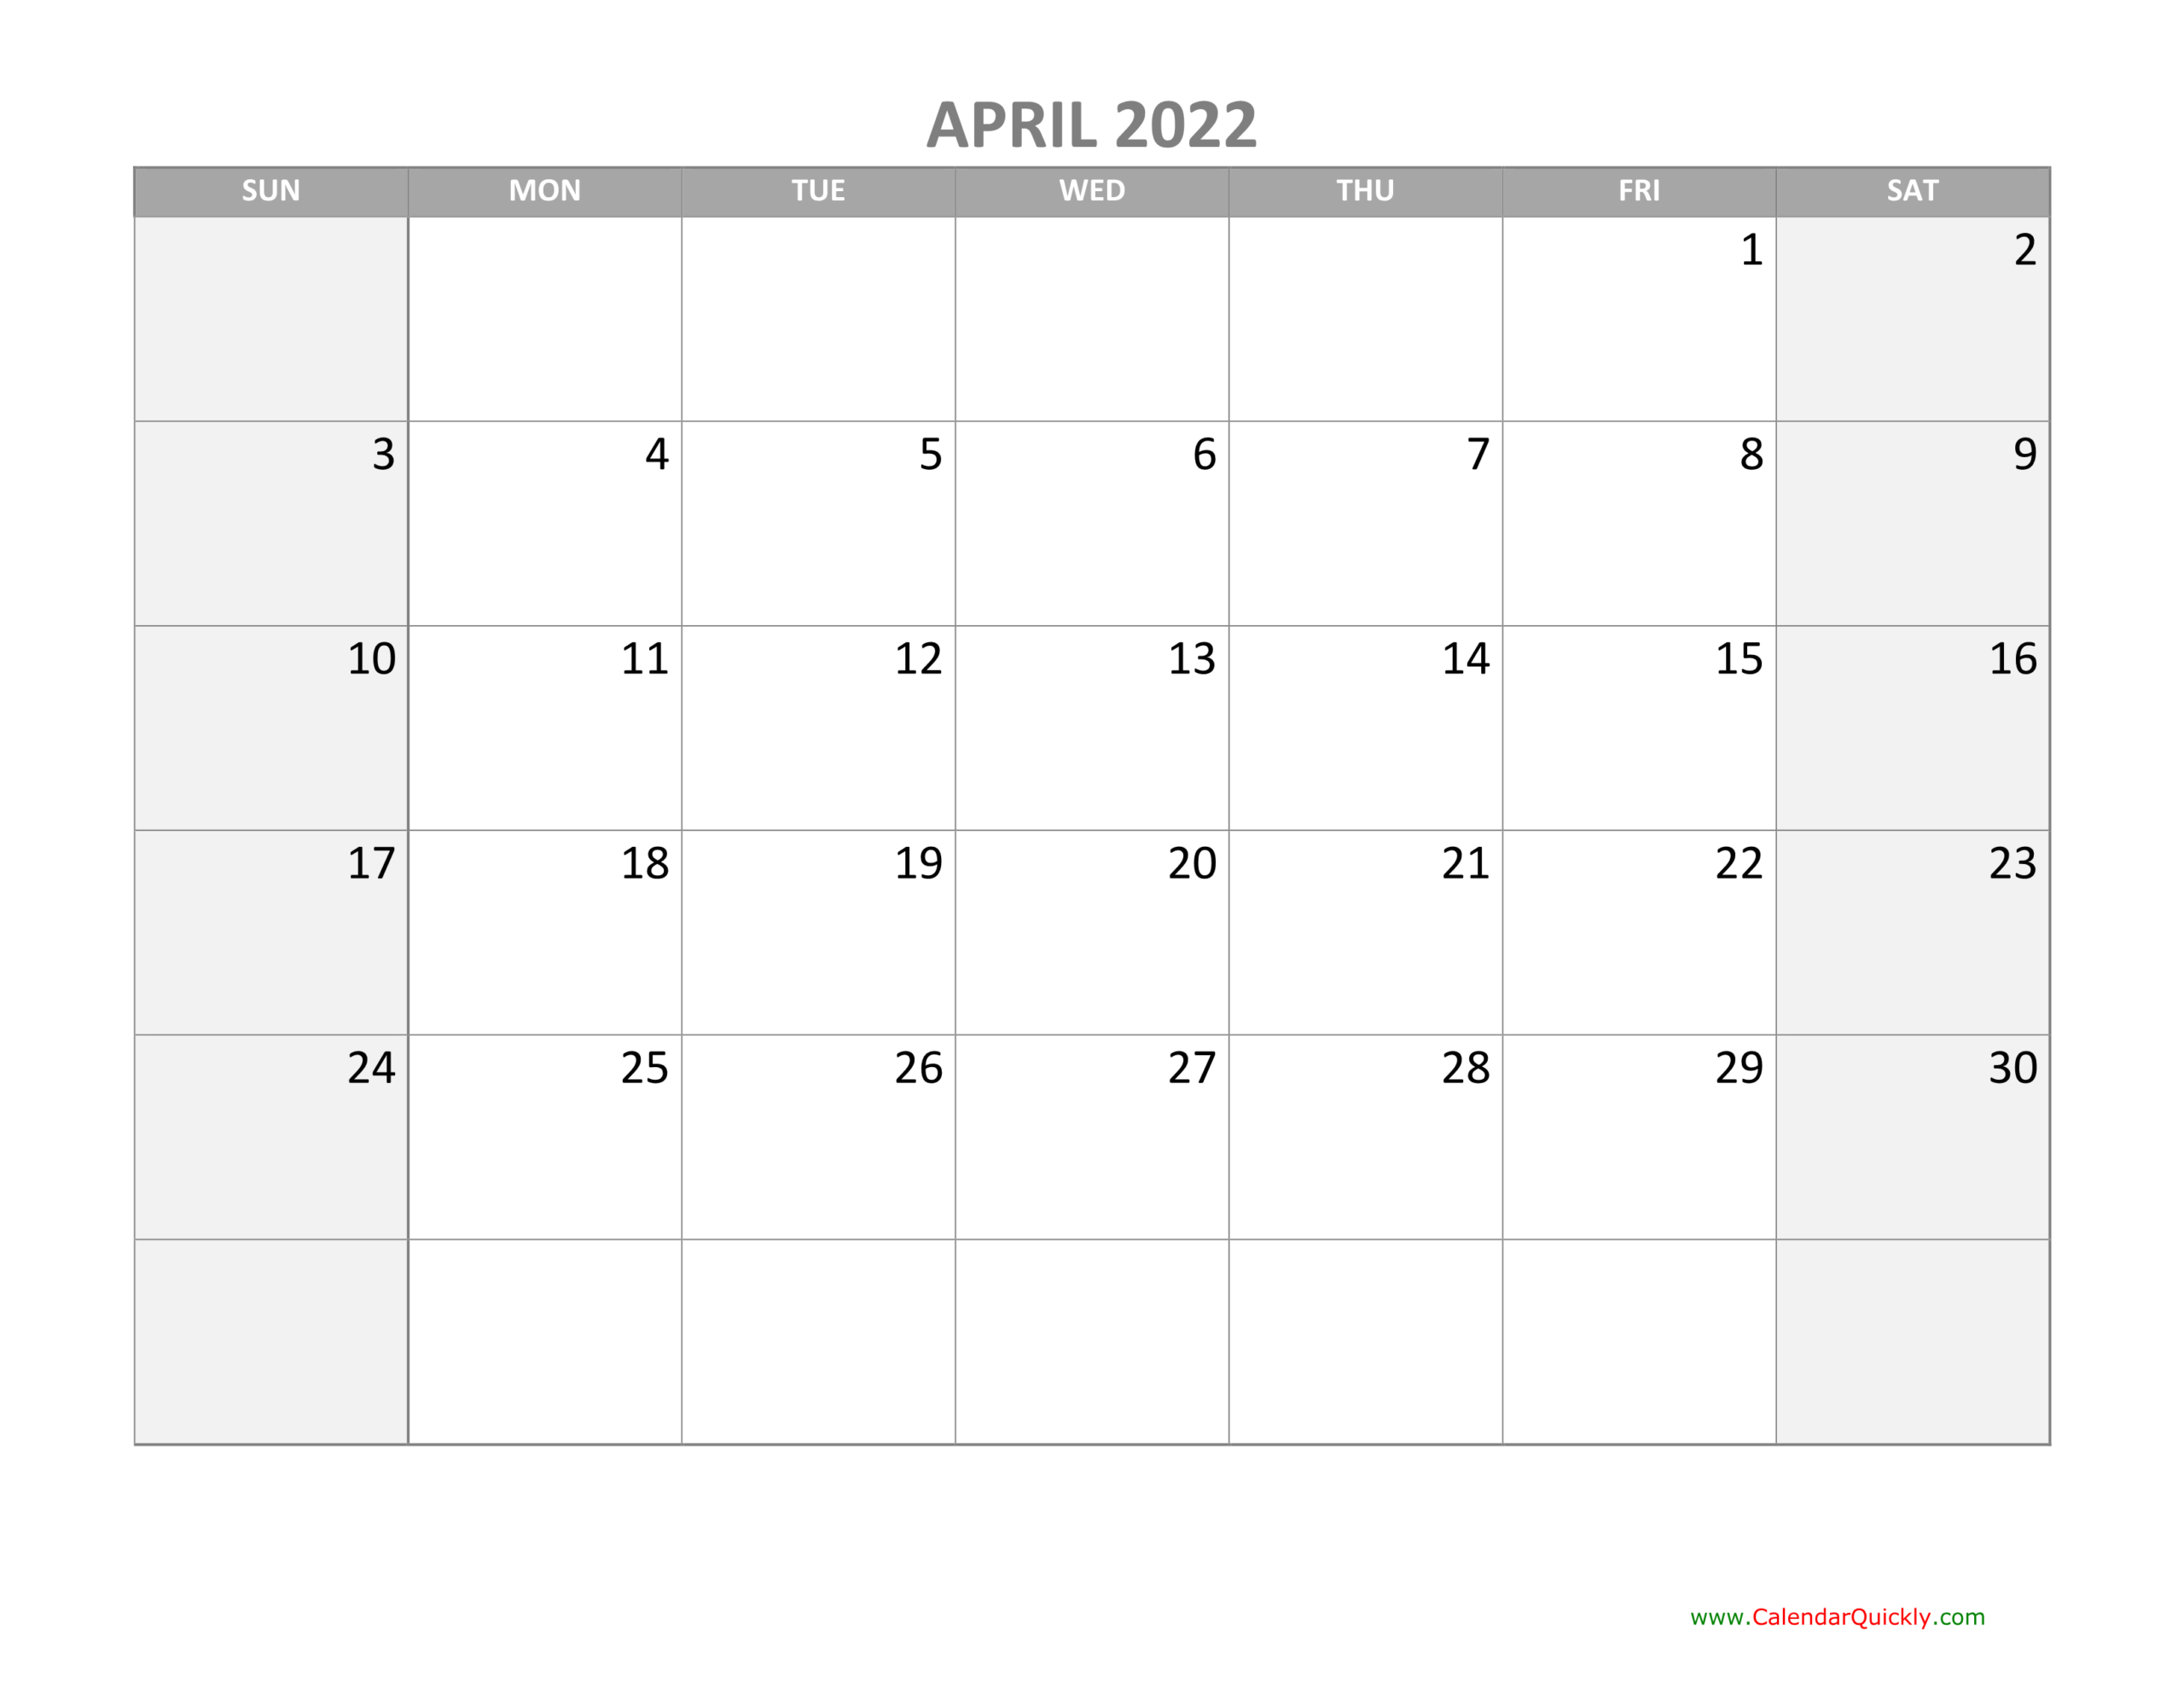 April Calendar 2022 With Holidays | Calendar Quickly  Calendar 2022 January February March April